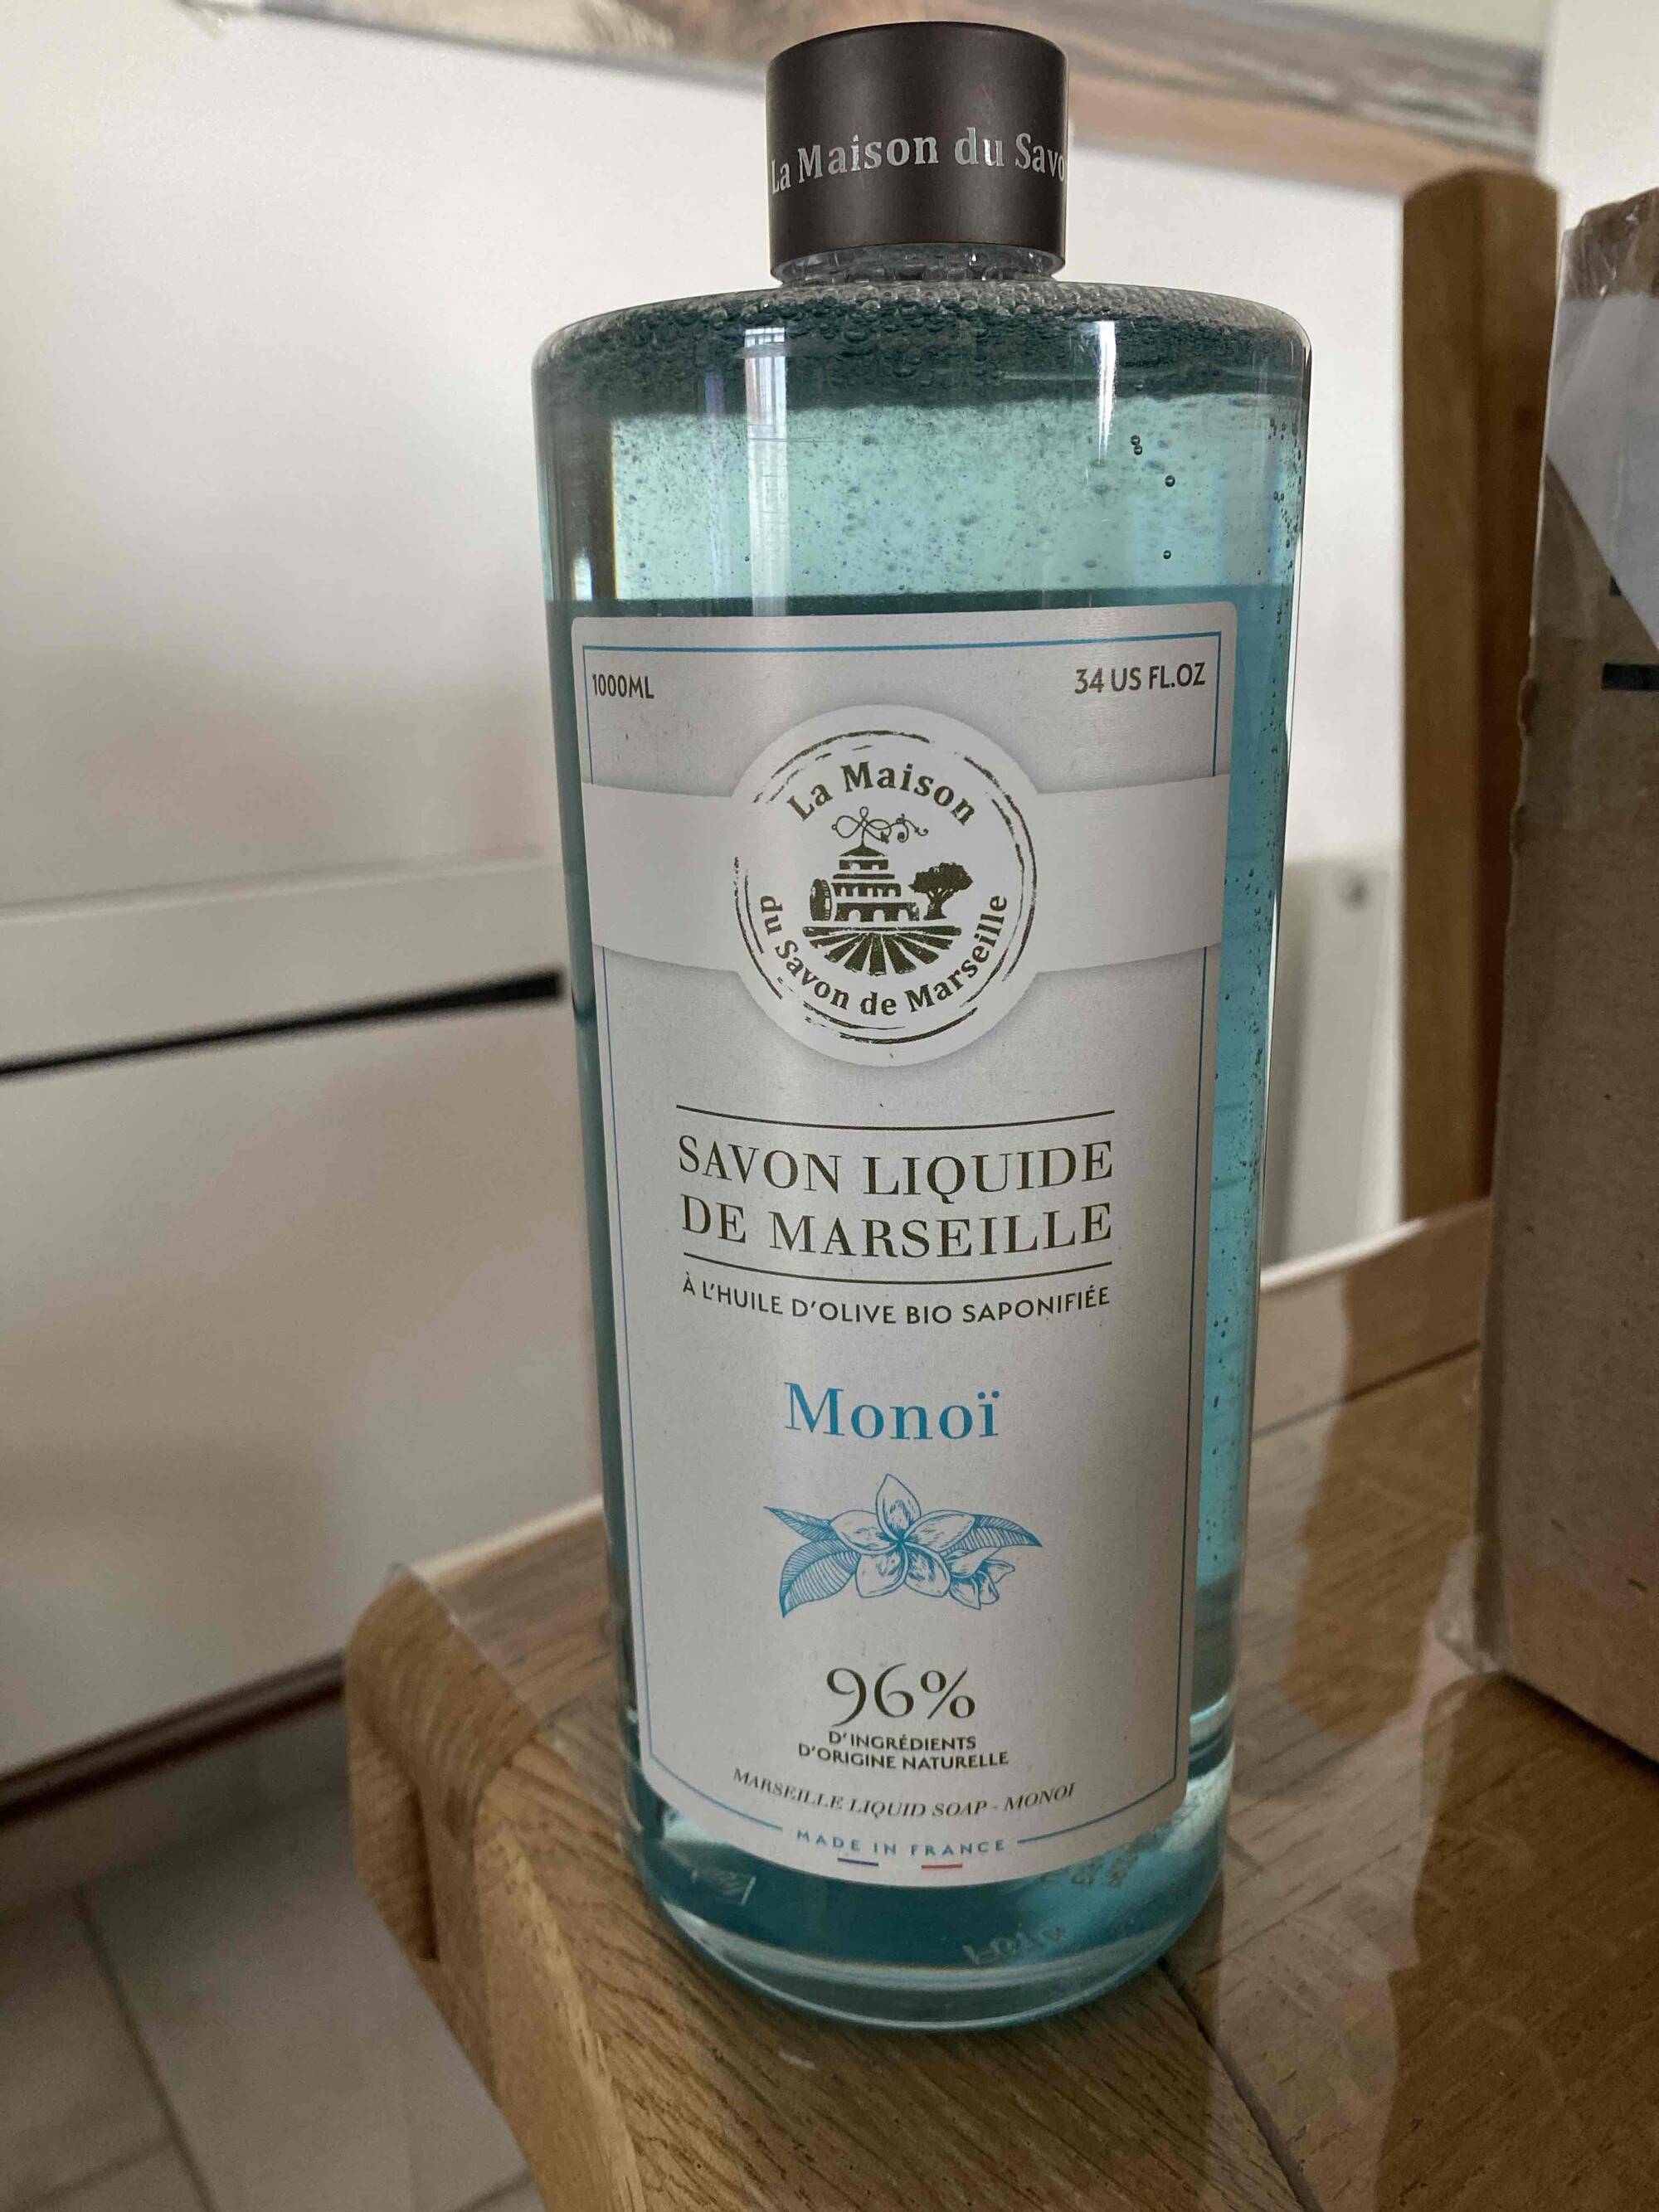 LA MAISON DU SAVON DE MARSEILLE - Savon liquide de Marseille monoï 